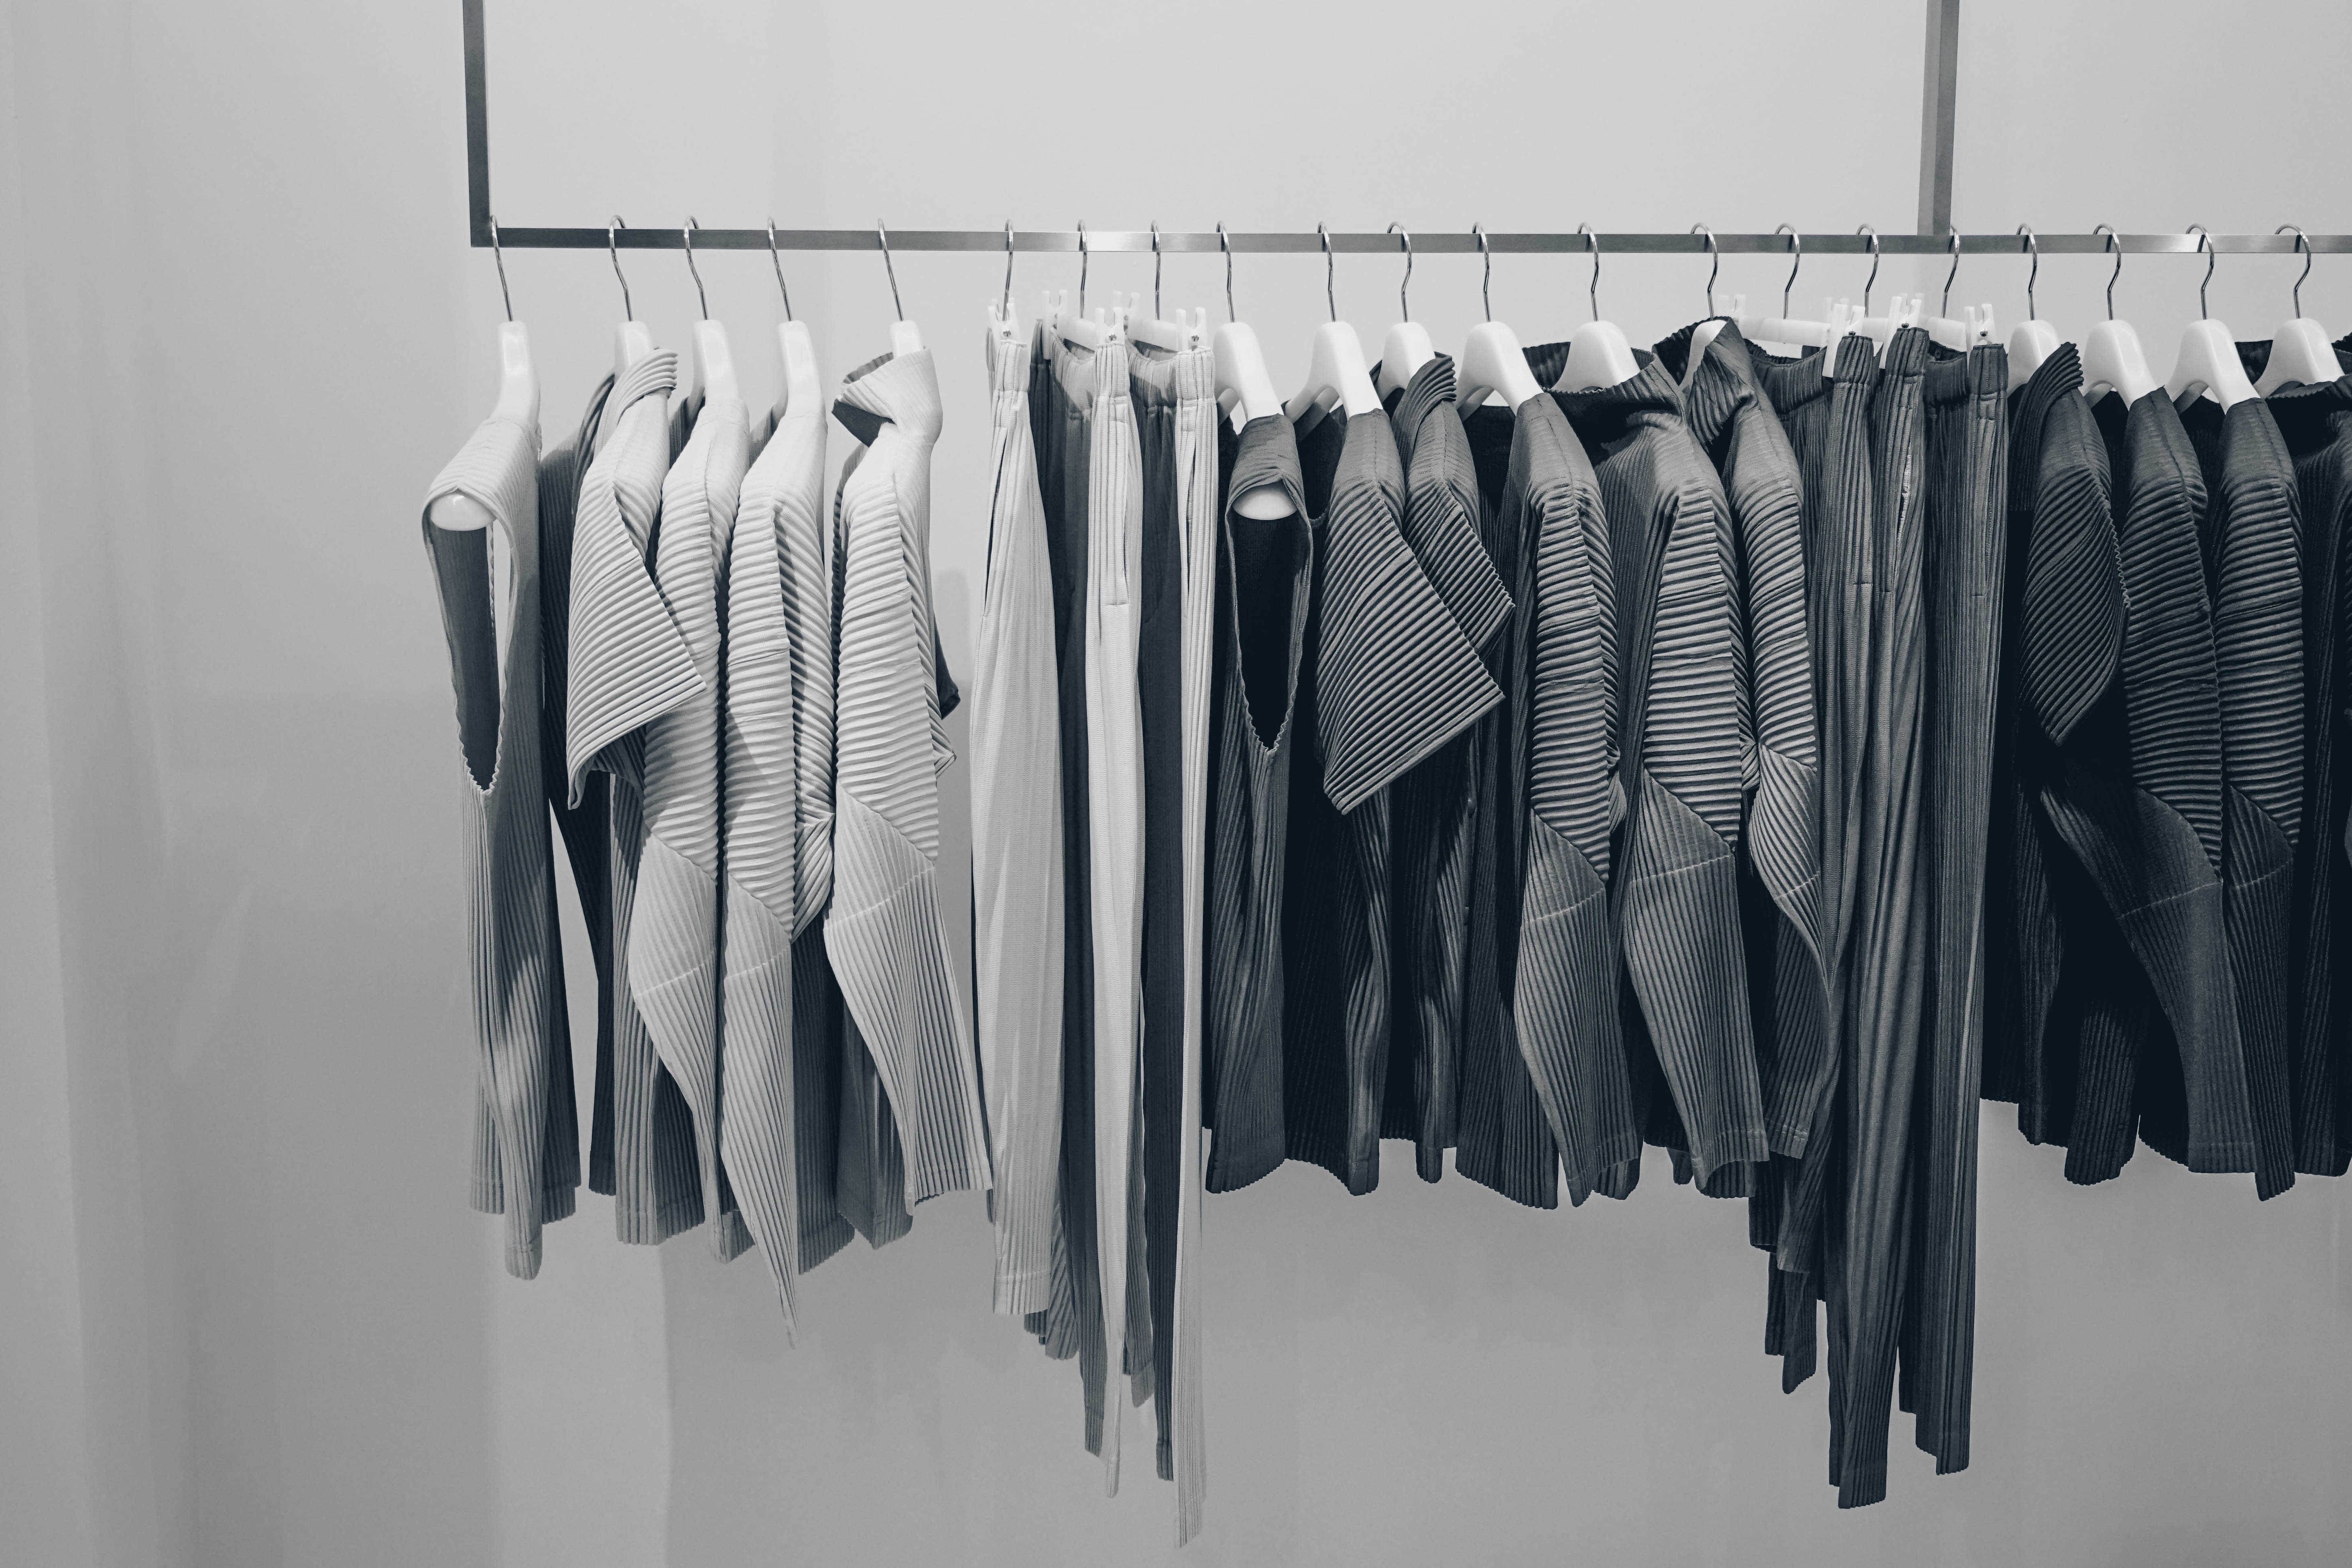 Clothing and fashion